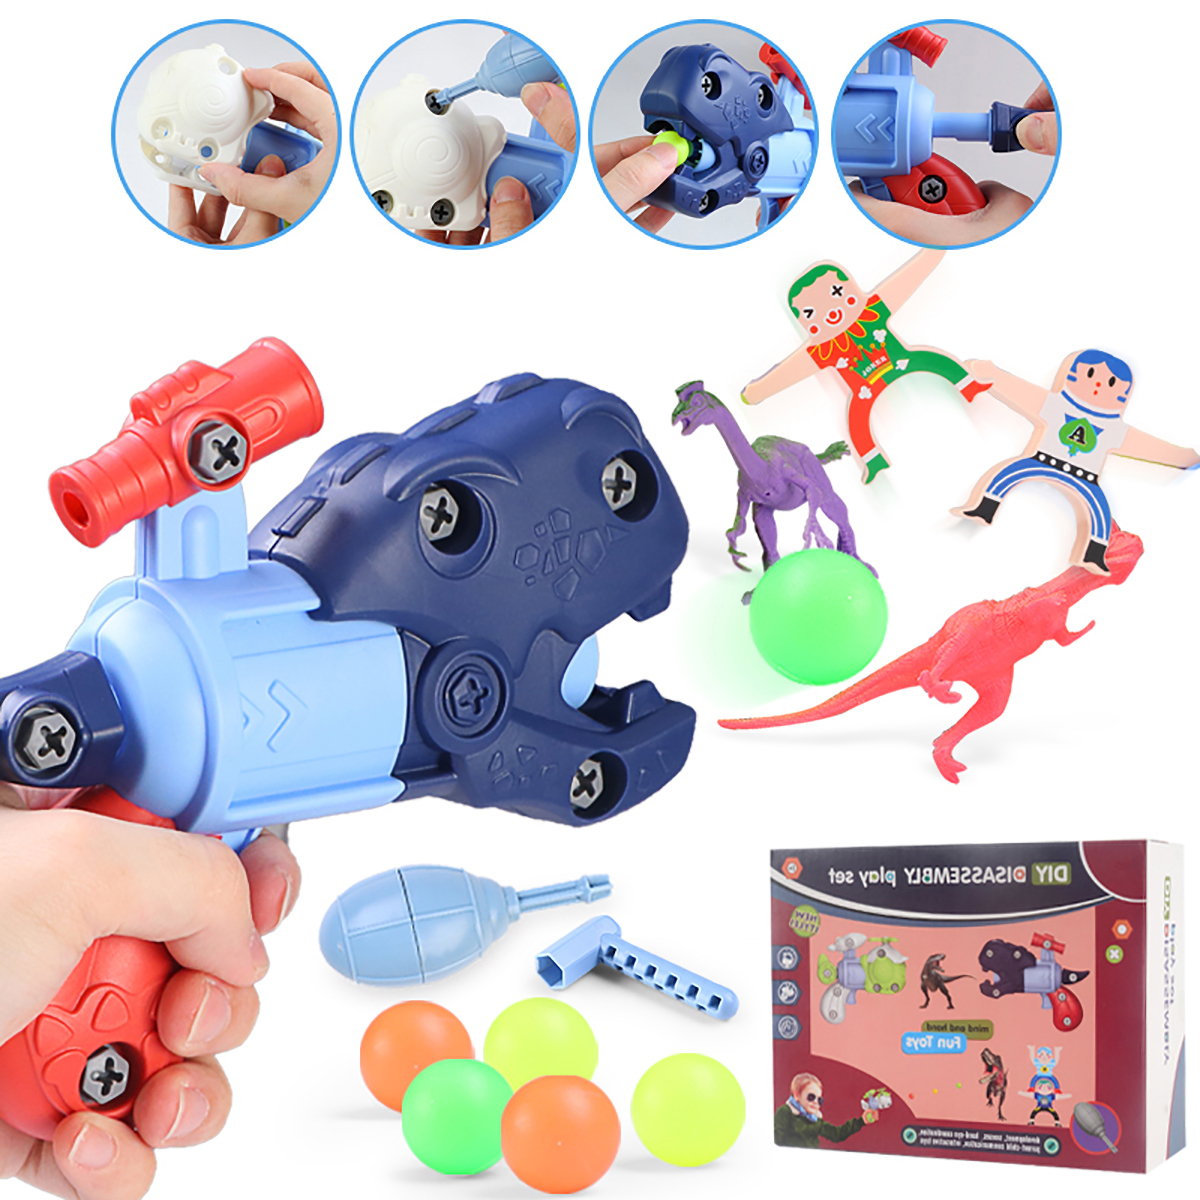 DIY-Disassembly-DinosaurAirplane-Guns-Play-Set-Model-Blocks-Assemble-Educational-Toy-for-Kids-Gift-1829732-3